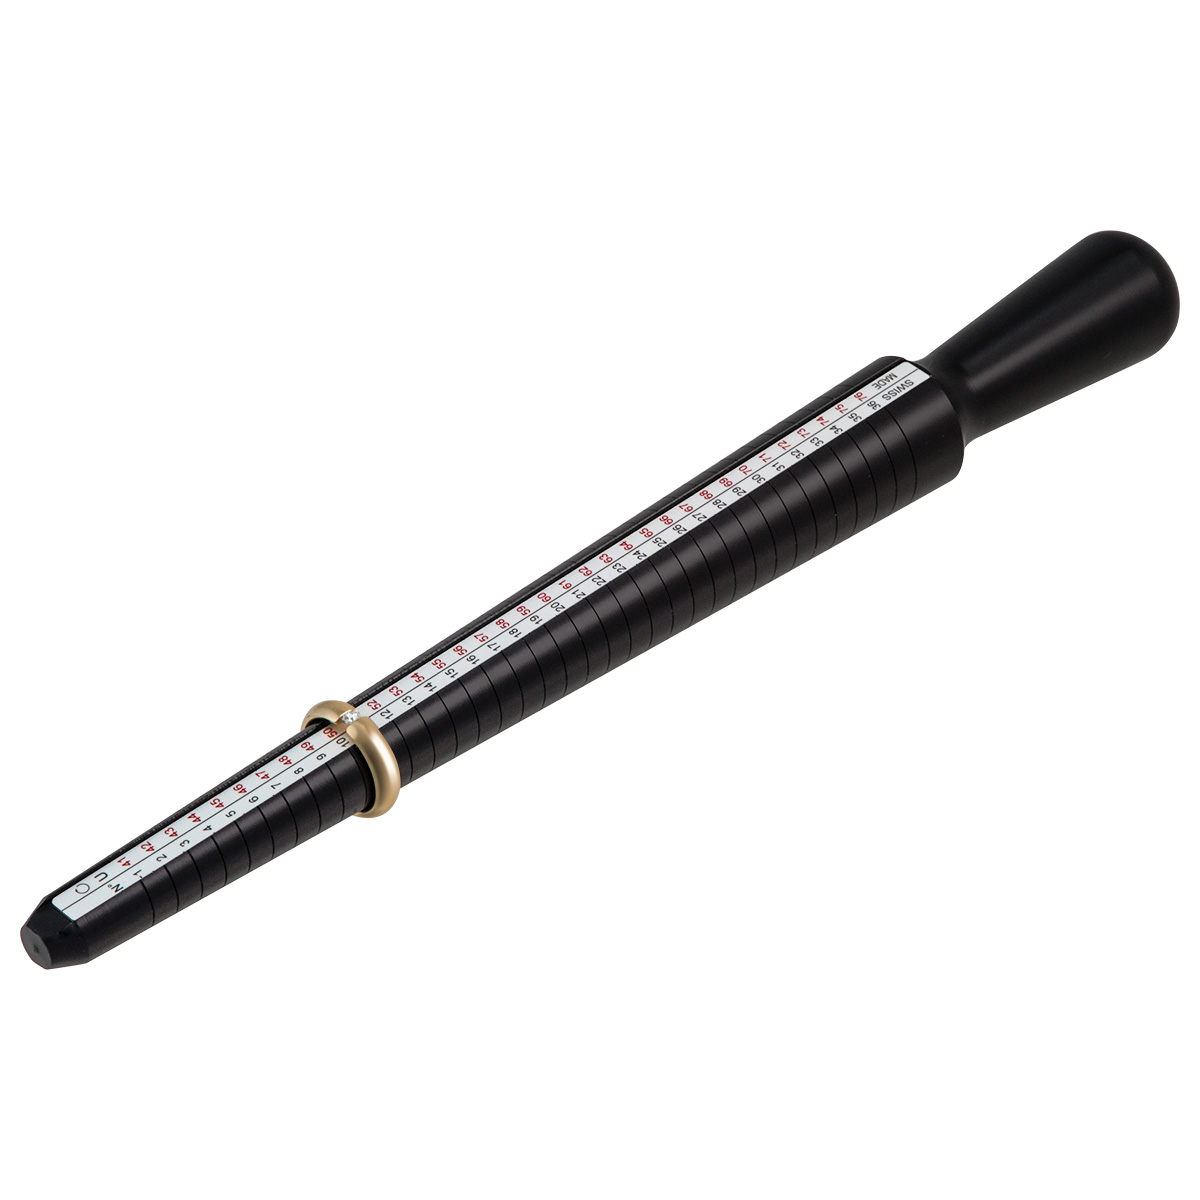 Bergeon 5235-4-PN ring sizing stick, POM, black, FR, US, UK, circumference